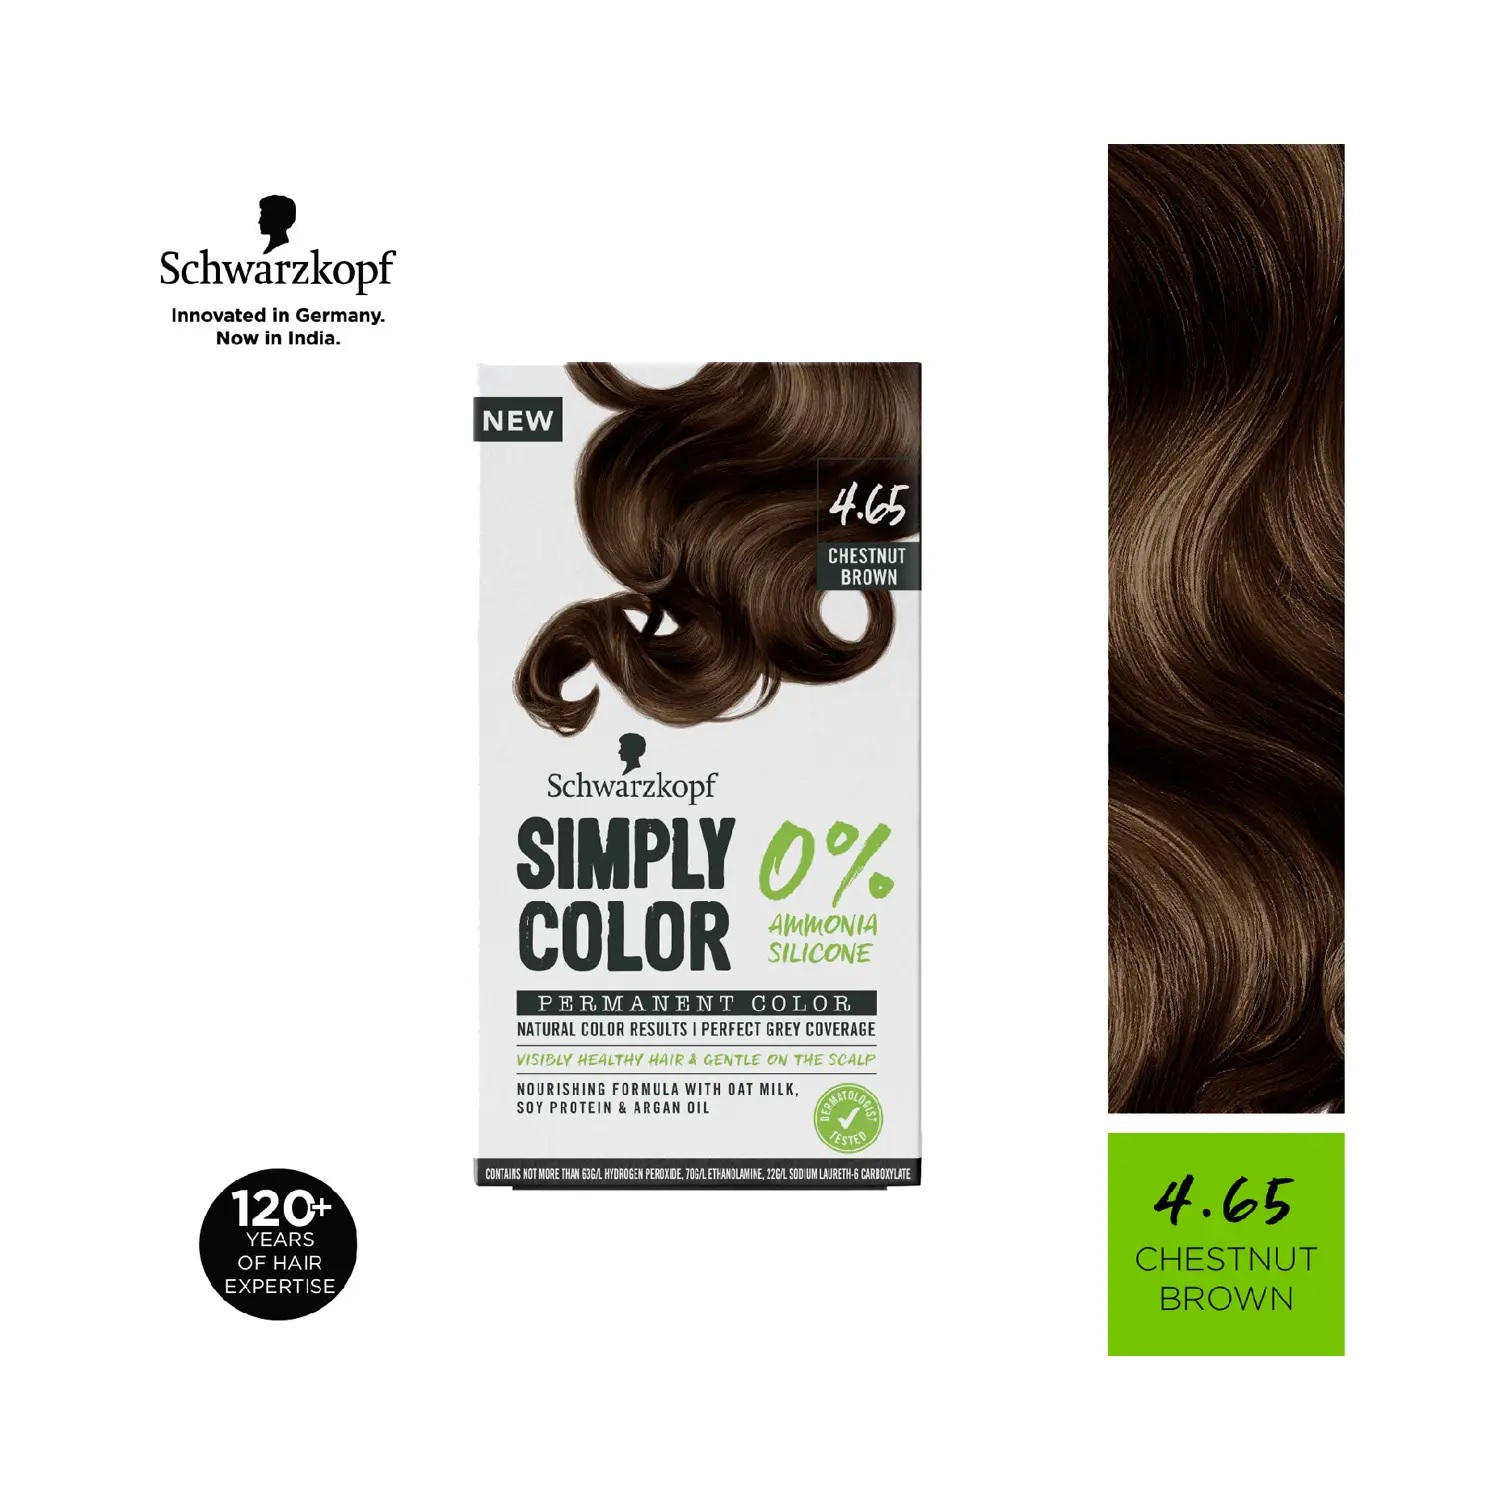 Schwarzkopf Simply Color 4.65 Chestnut Brown